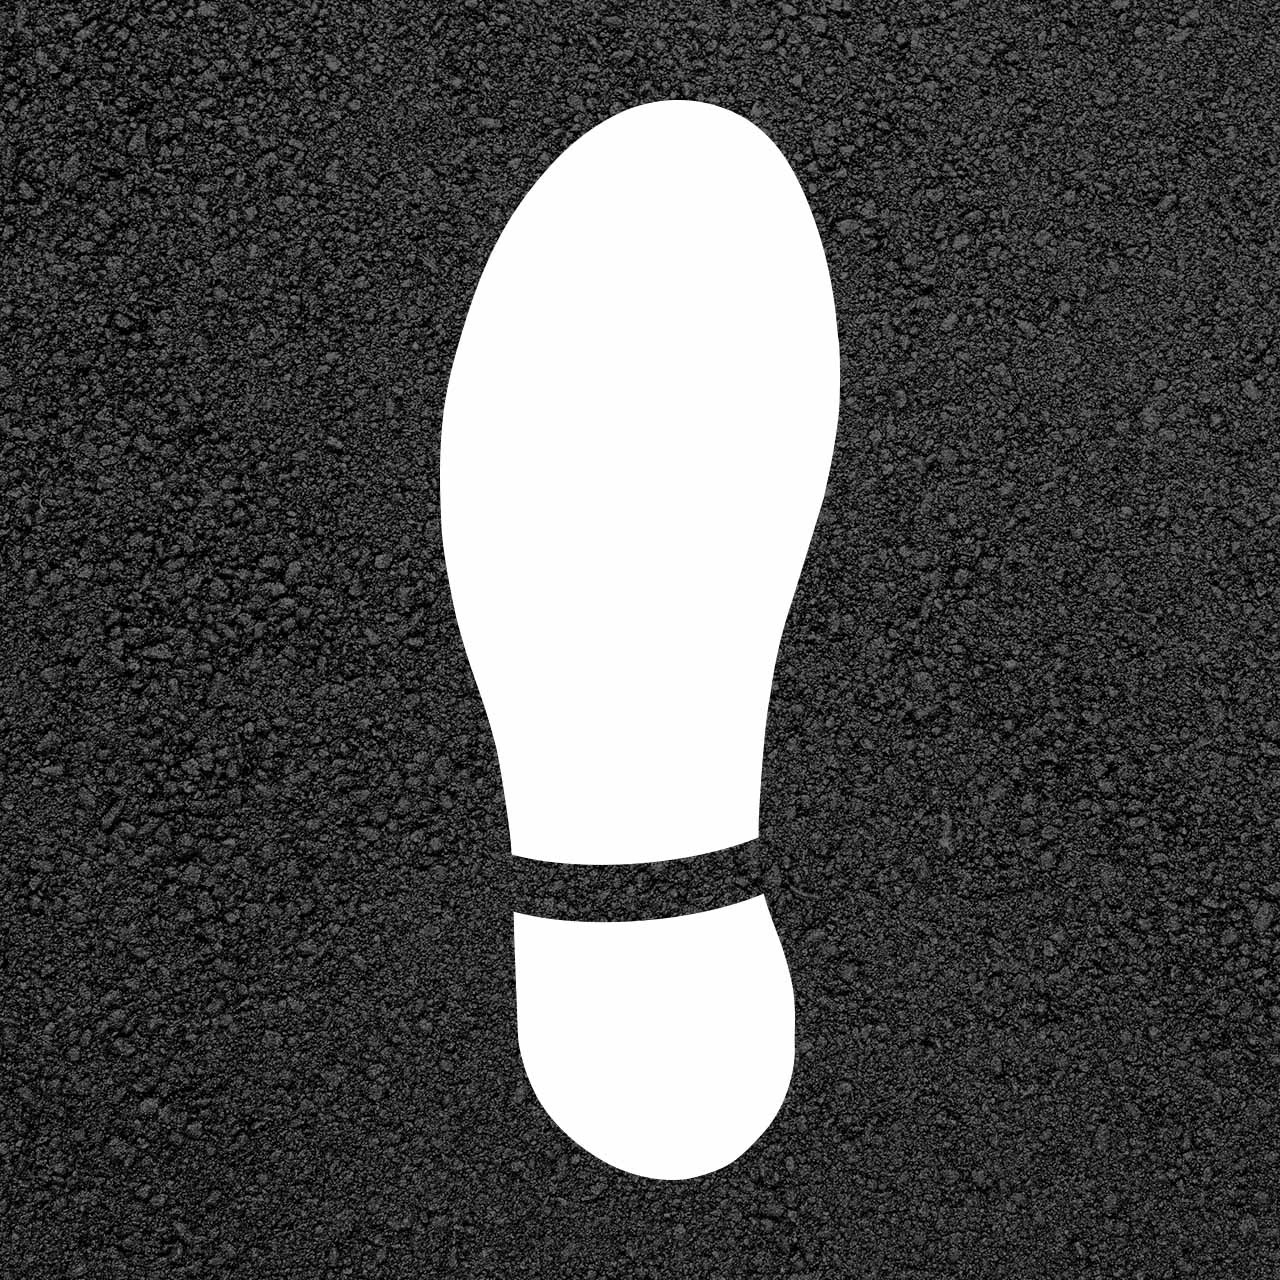 Footprint/ Shoe Print Warehouse Safety Stencil